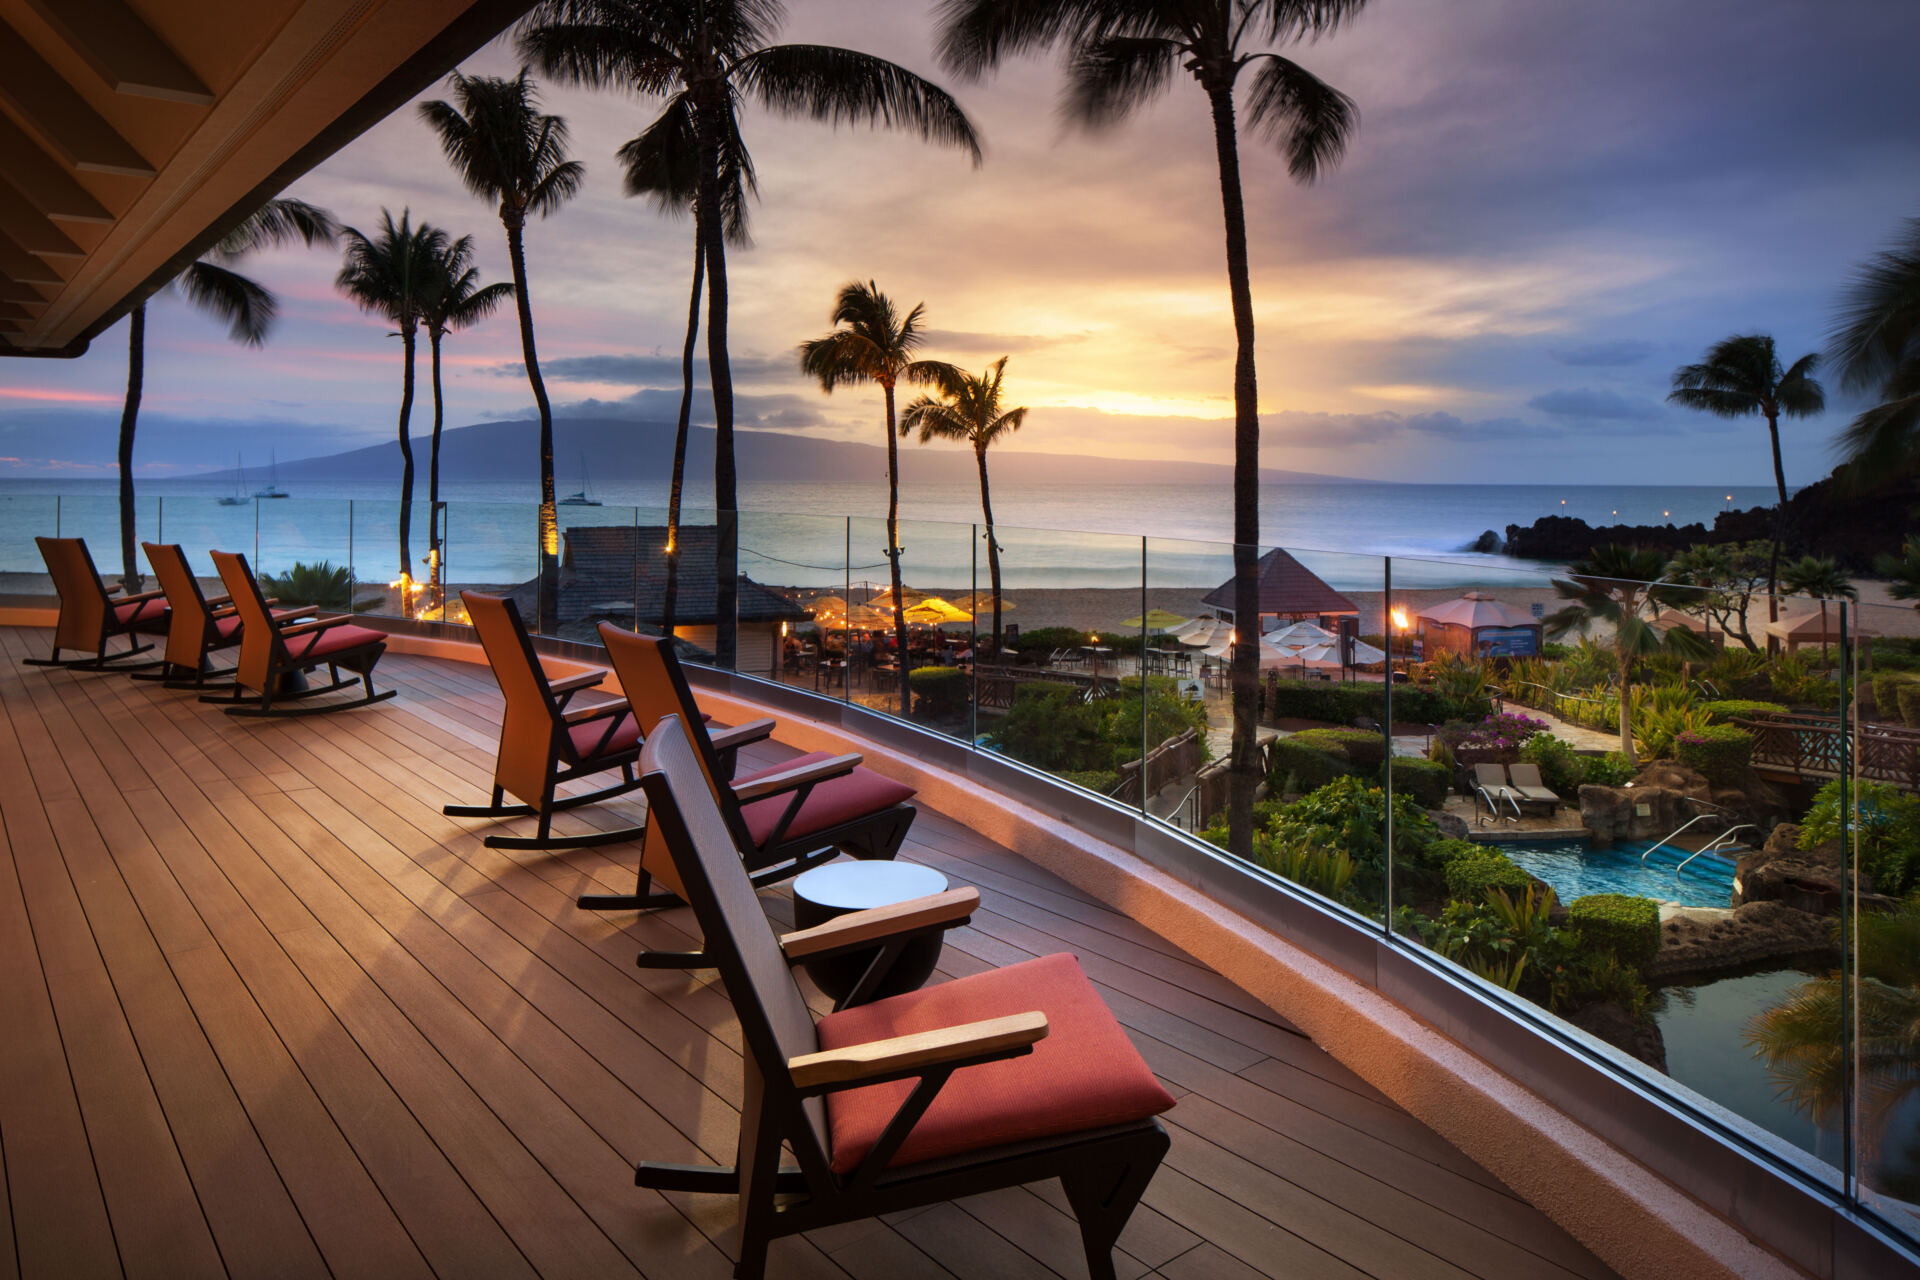 The Sandbar lobby bar at the Sheraton Maui Resort & Spa. Photo Courtesy Sheraton Maui Resort & Spa